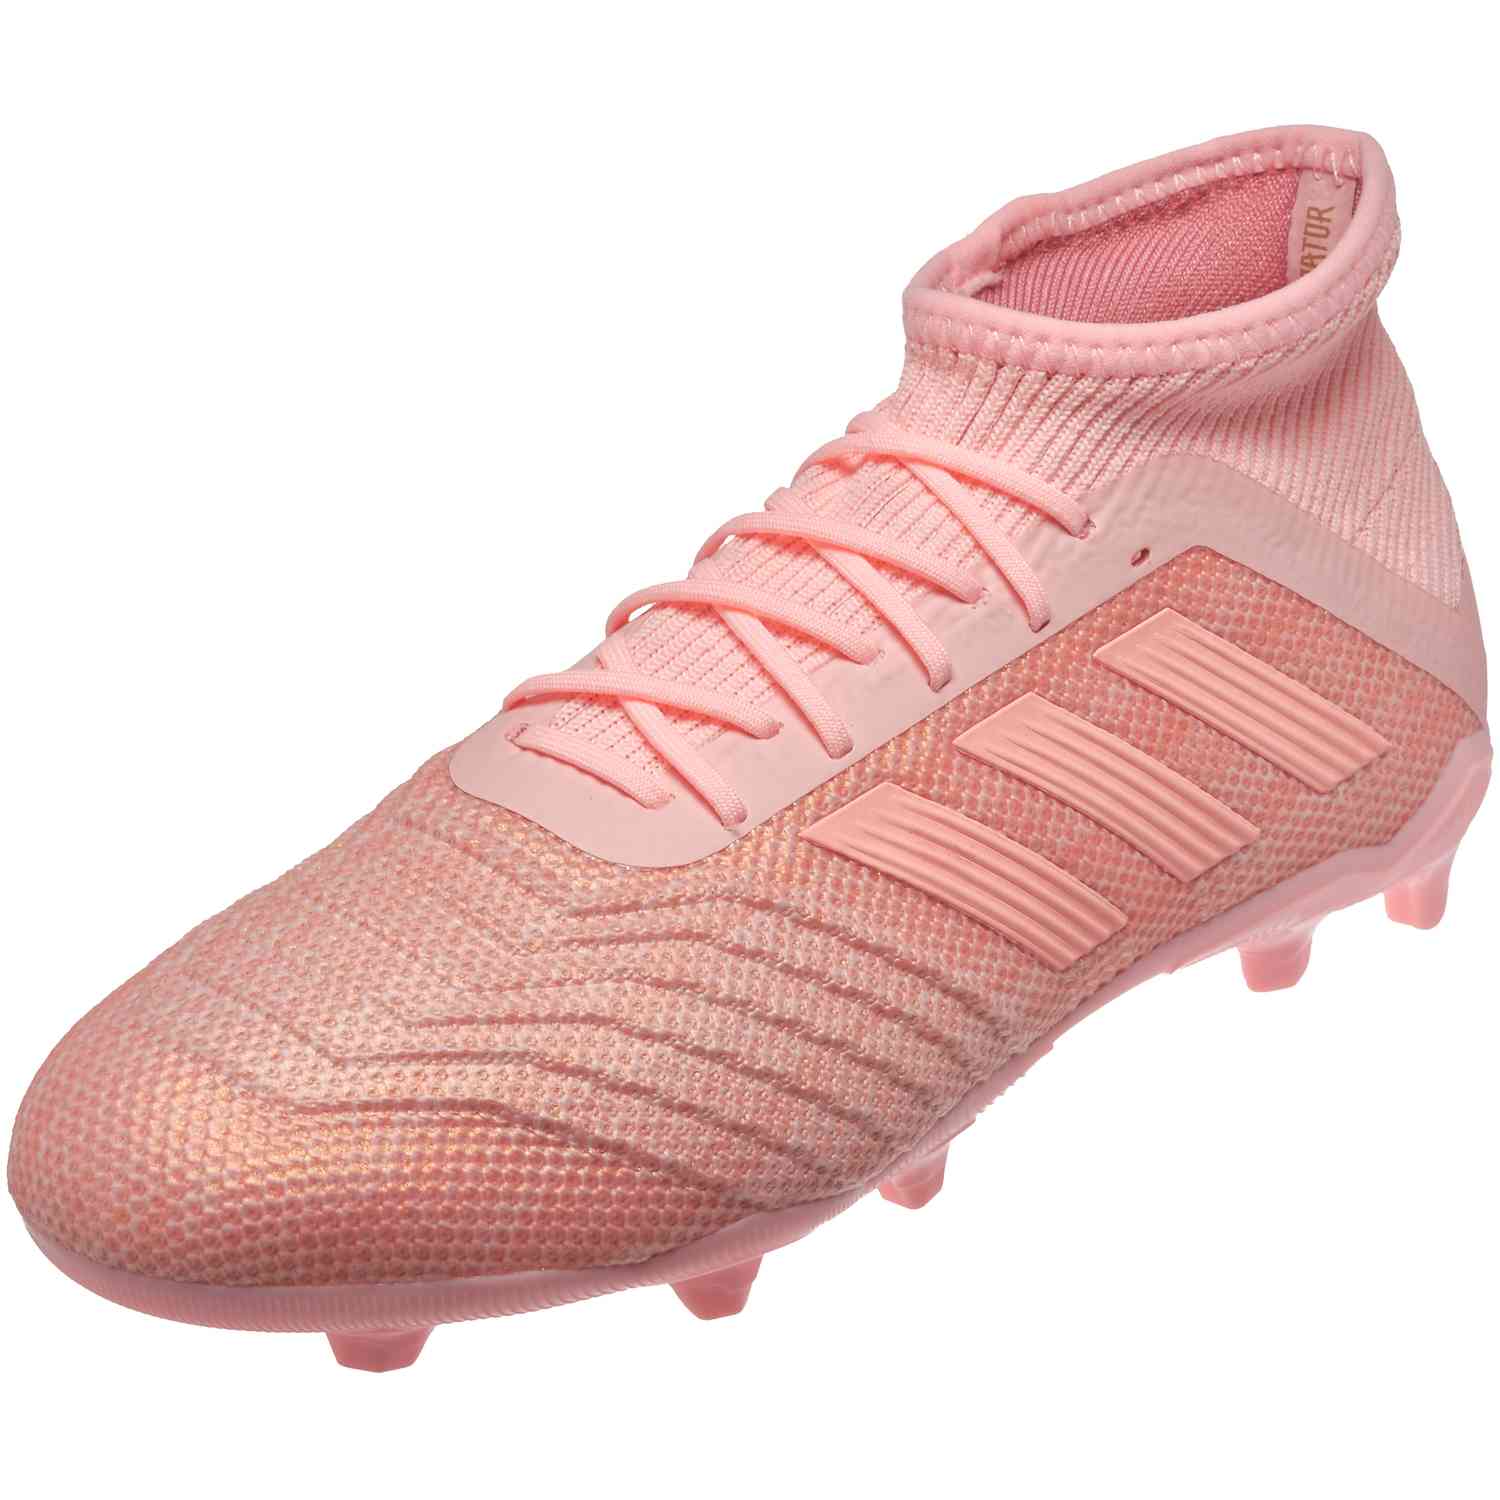 Adidas Predator 18 1 Fg Youth Clear Orange Trace Pink Soccer